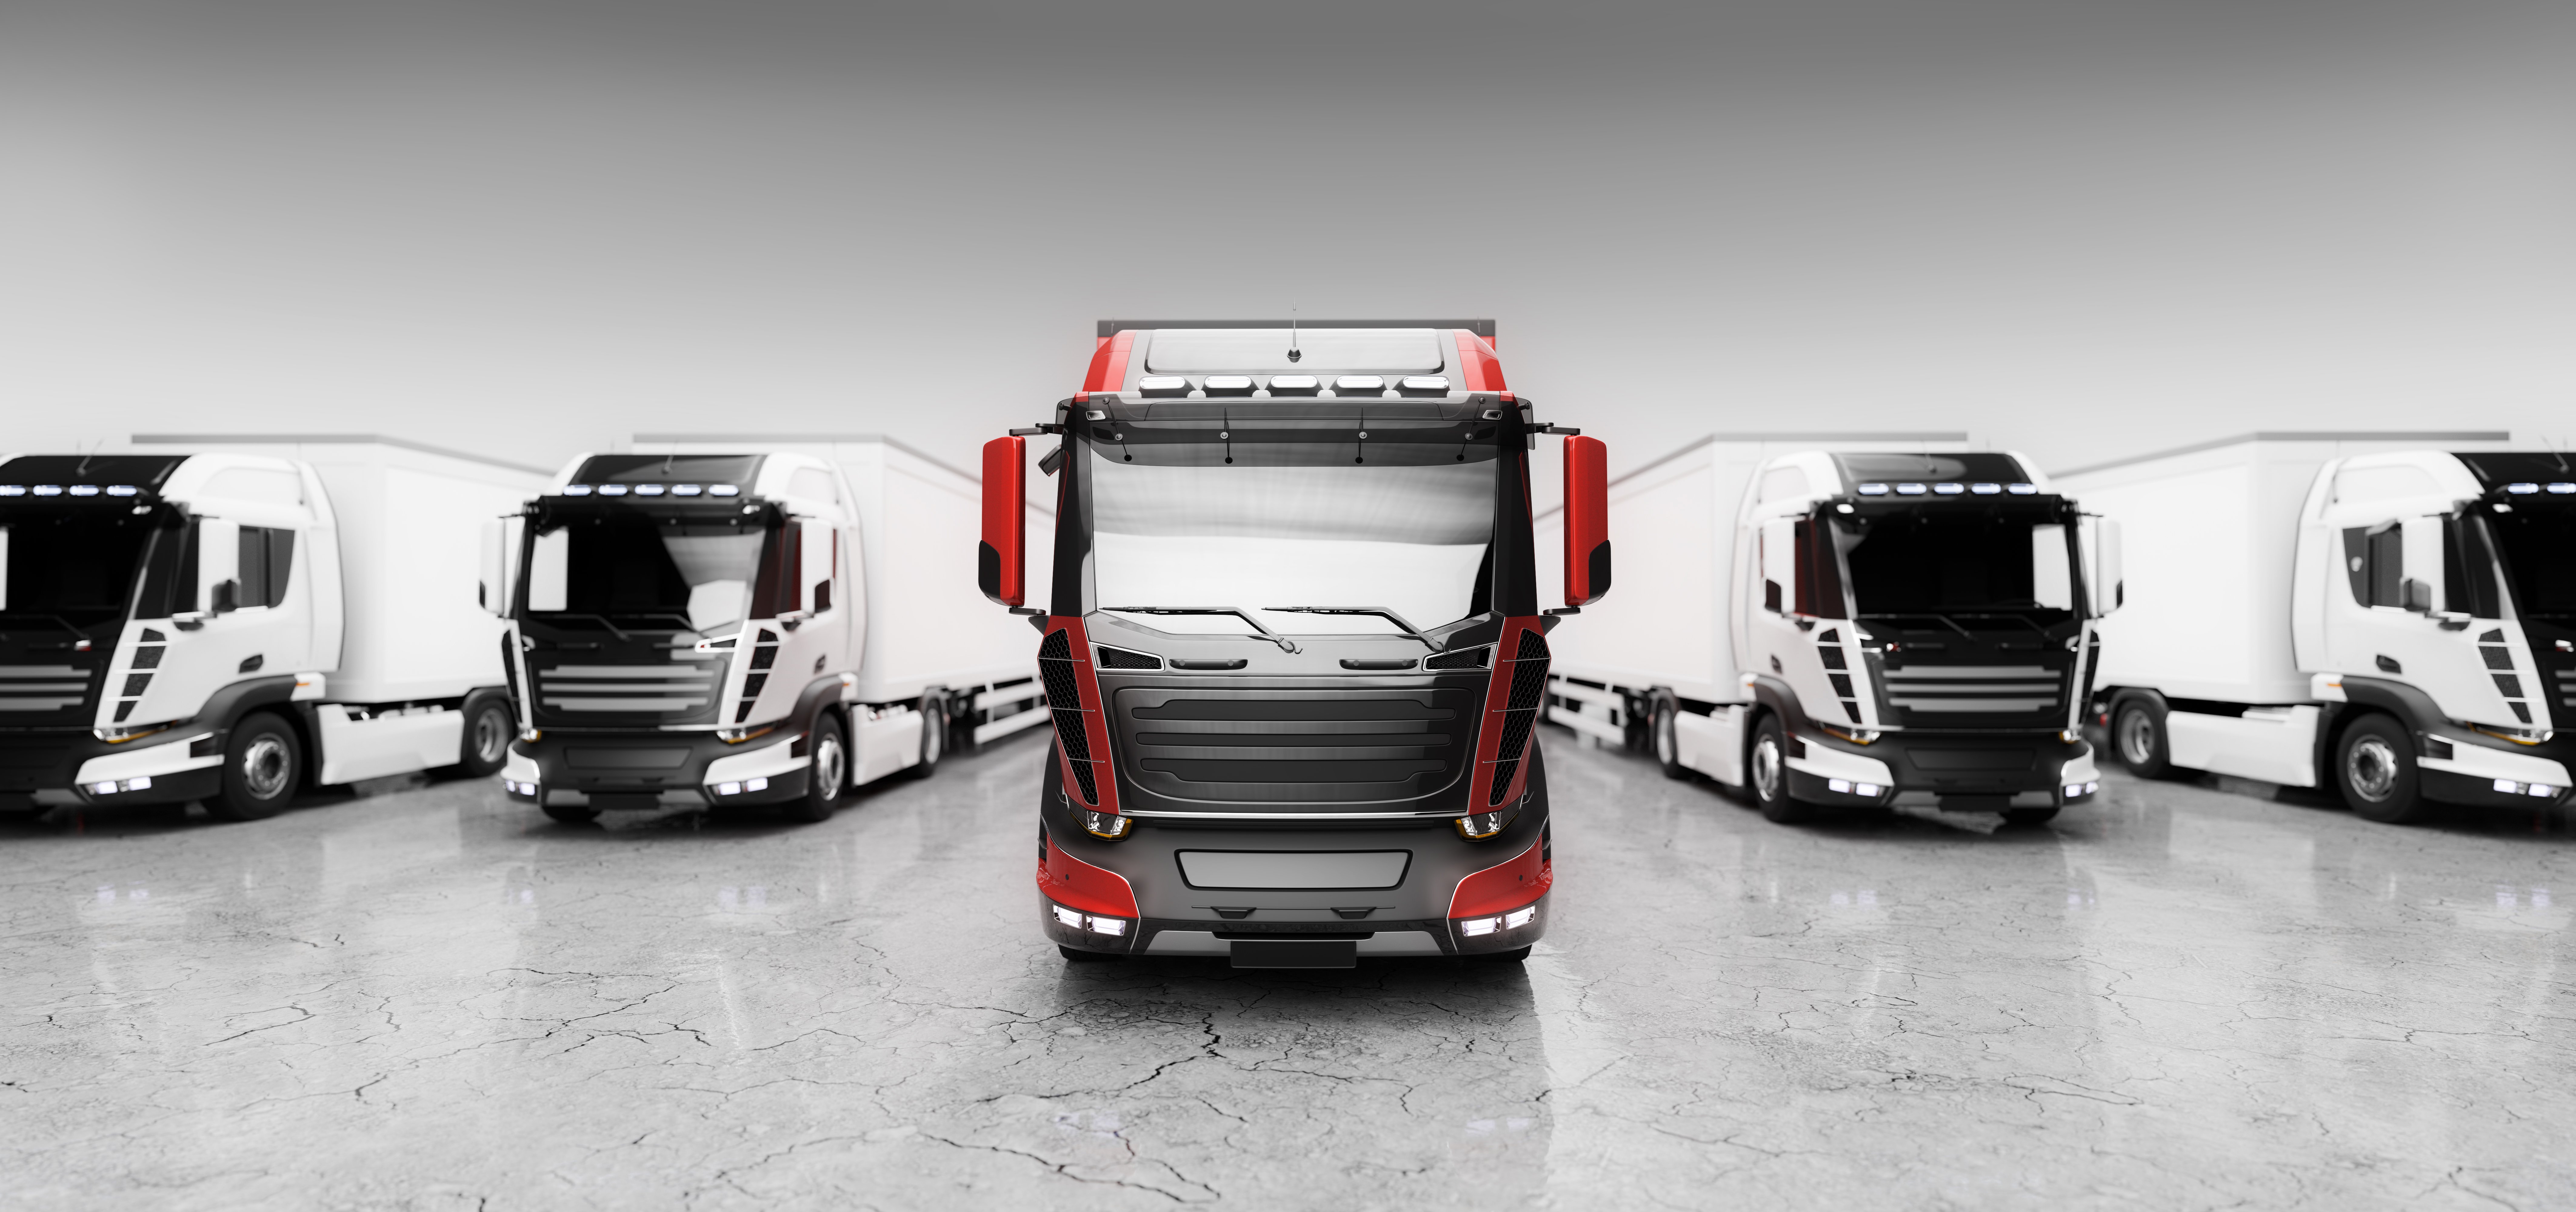 fleet-of-trucks-with-cargo-trailers-transport-sh-2021-08-26-22-41-11-utc